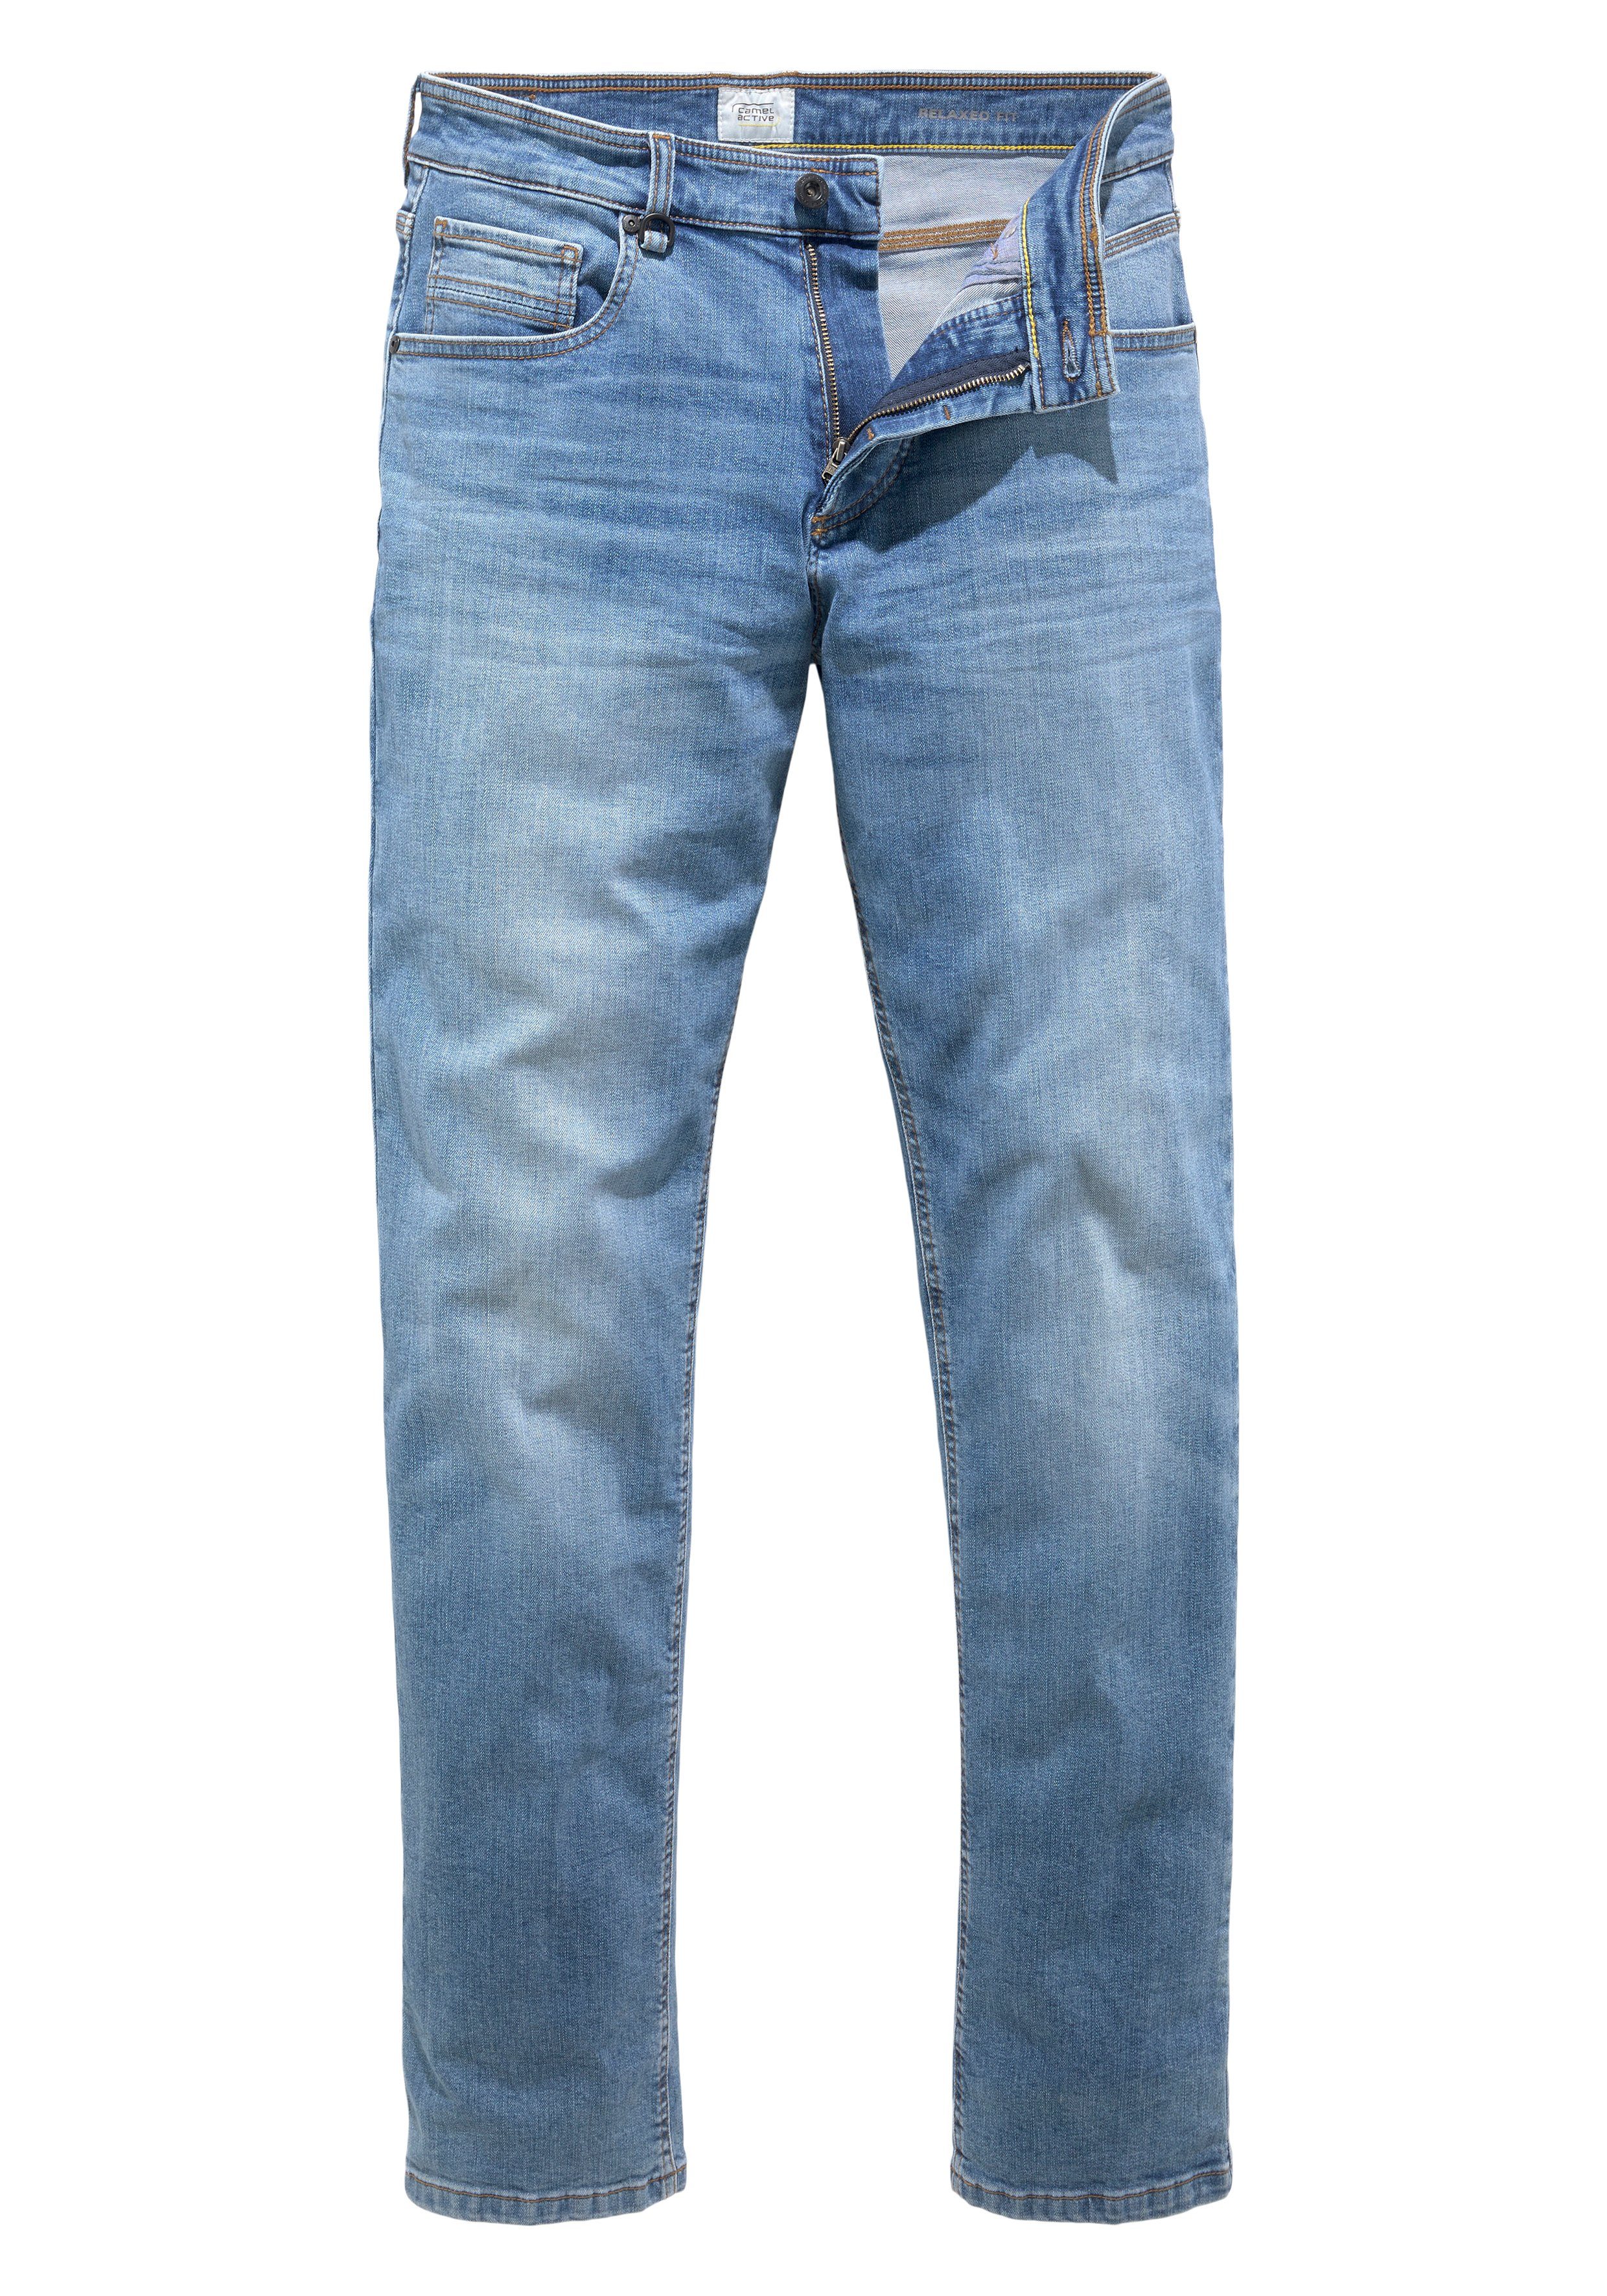 camel active 5-Pocket-Jeans WOODSTOCK ocean-blue